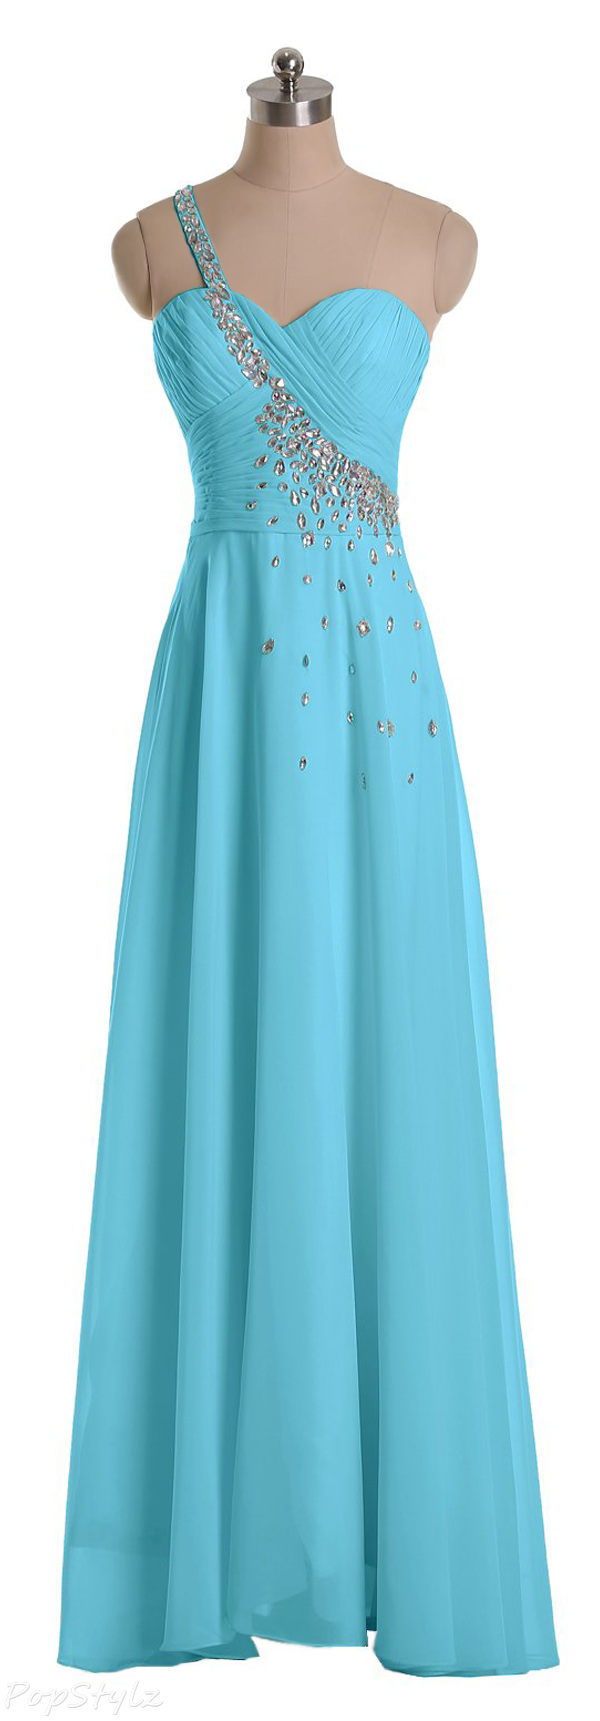 Sunvary 2015 Rhinestone One Shoulder Formal Dress